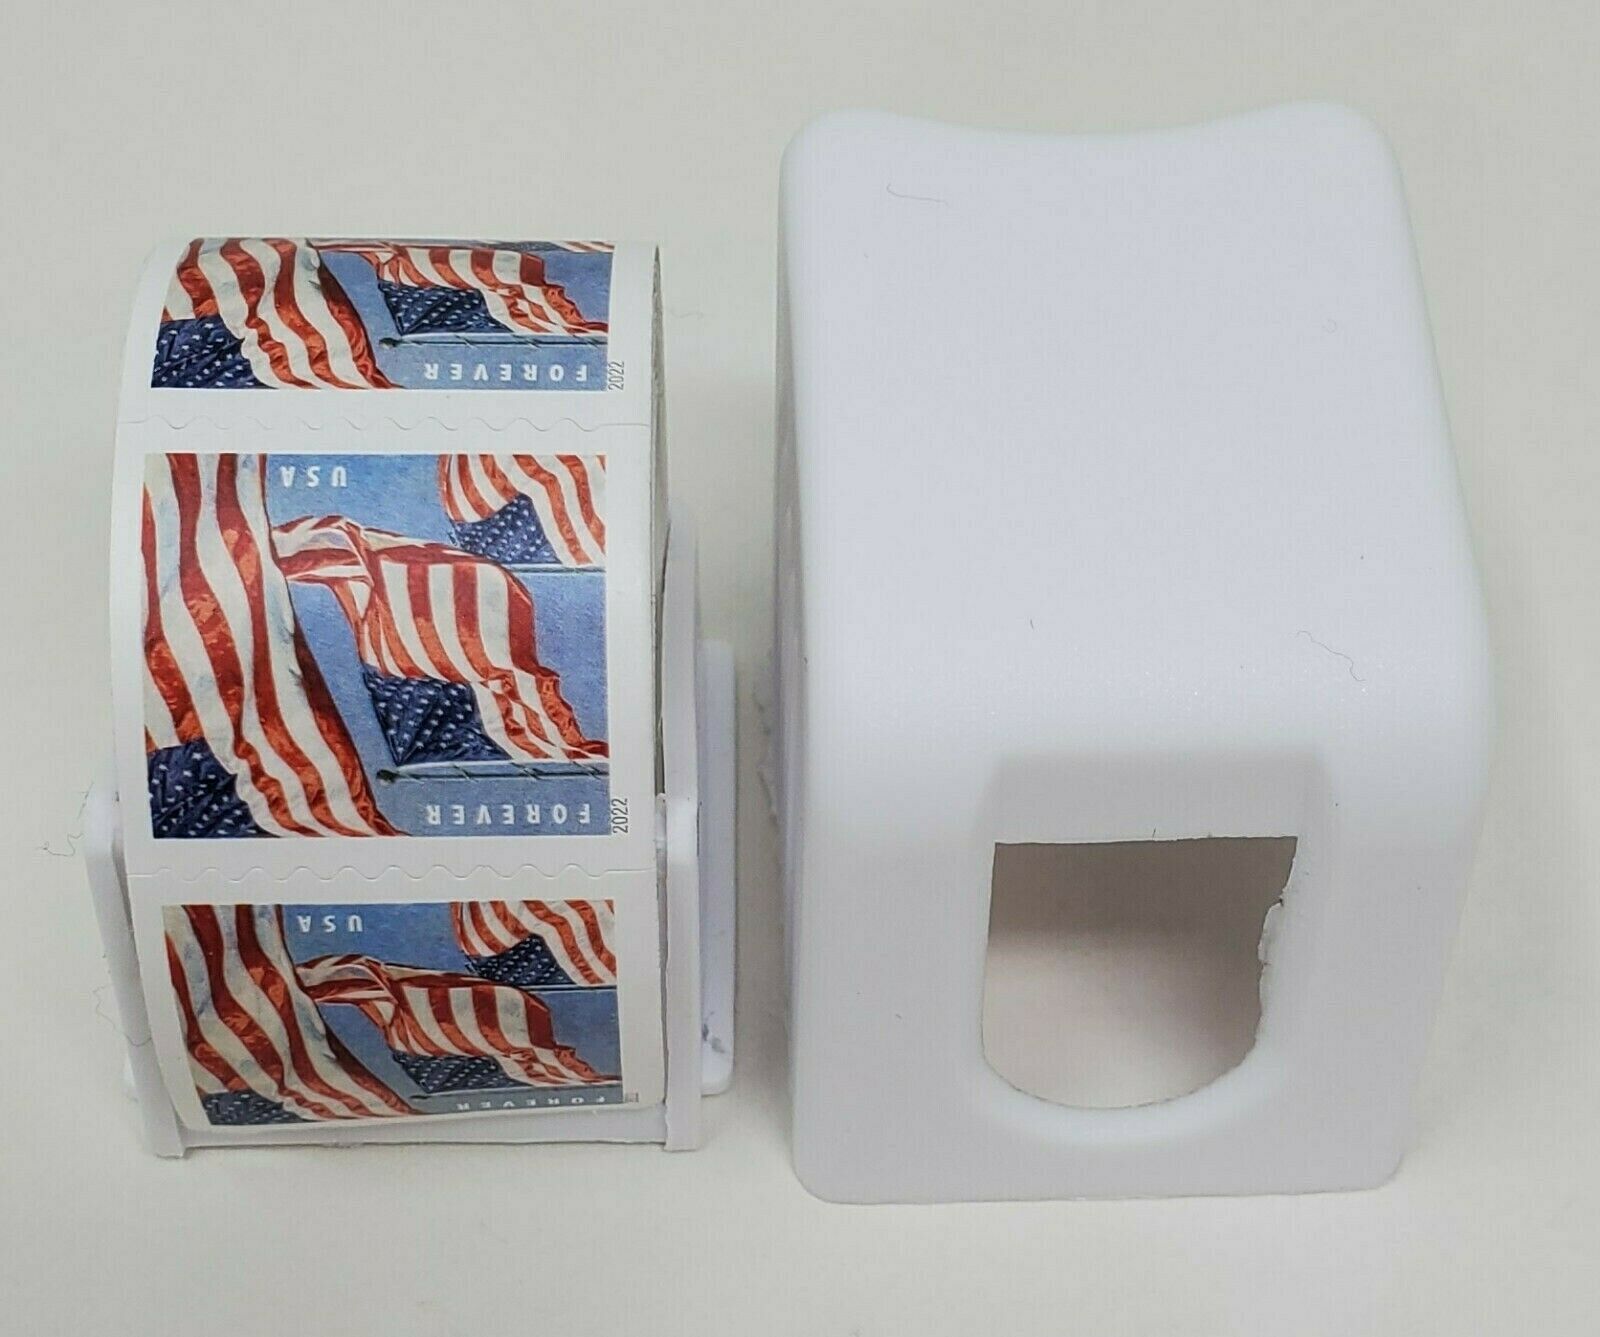 Stamp Holder Dispenser - Stamp Roll Holder - Postage Stamp Dispenser -  Stamp Holder for Roll of Stamps - Roll Stamp Dispenser - Stamps Postage  Forever